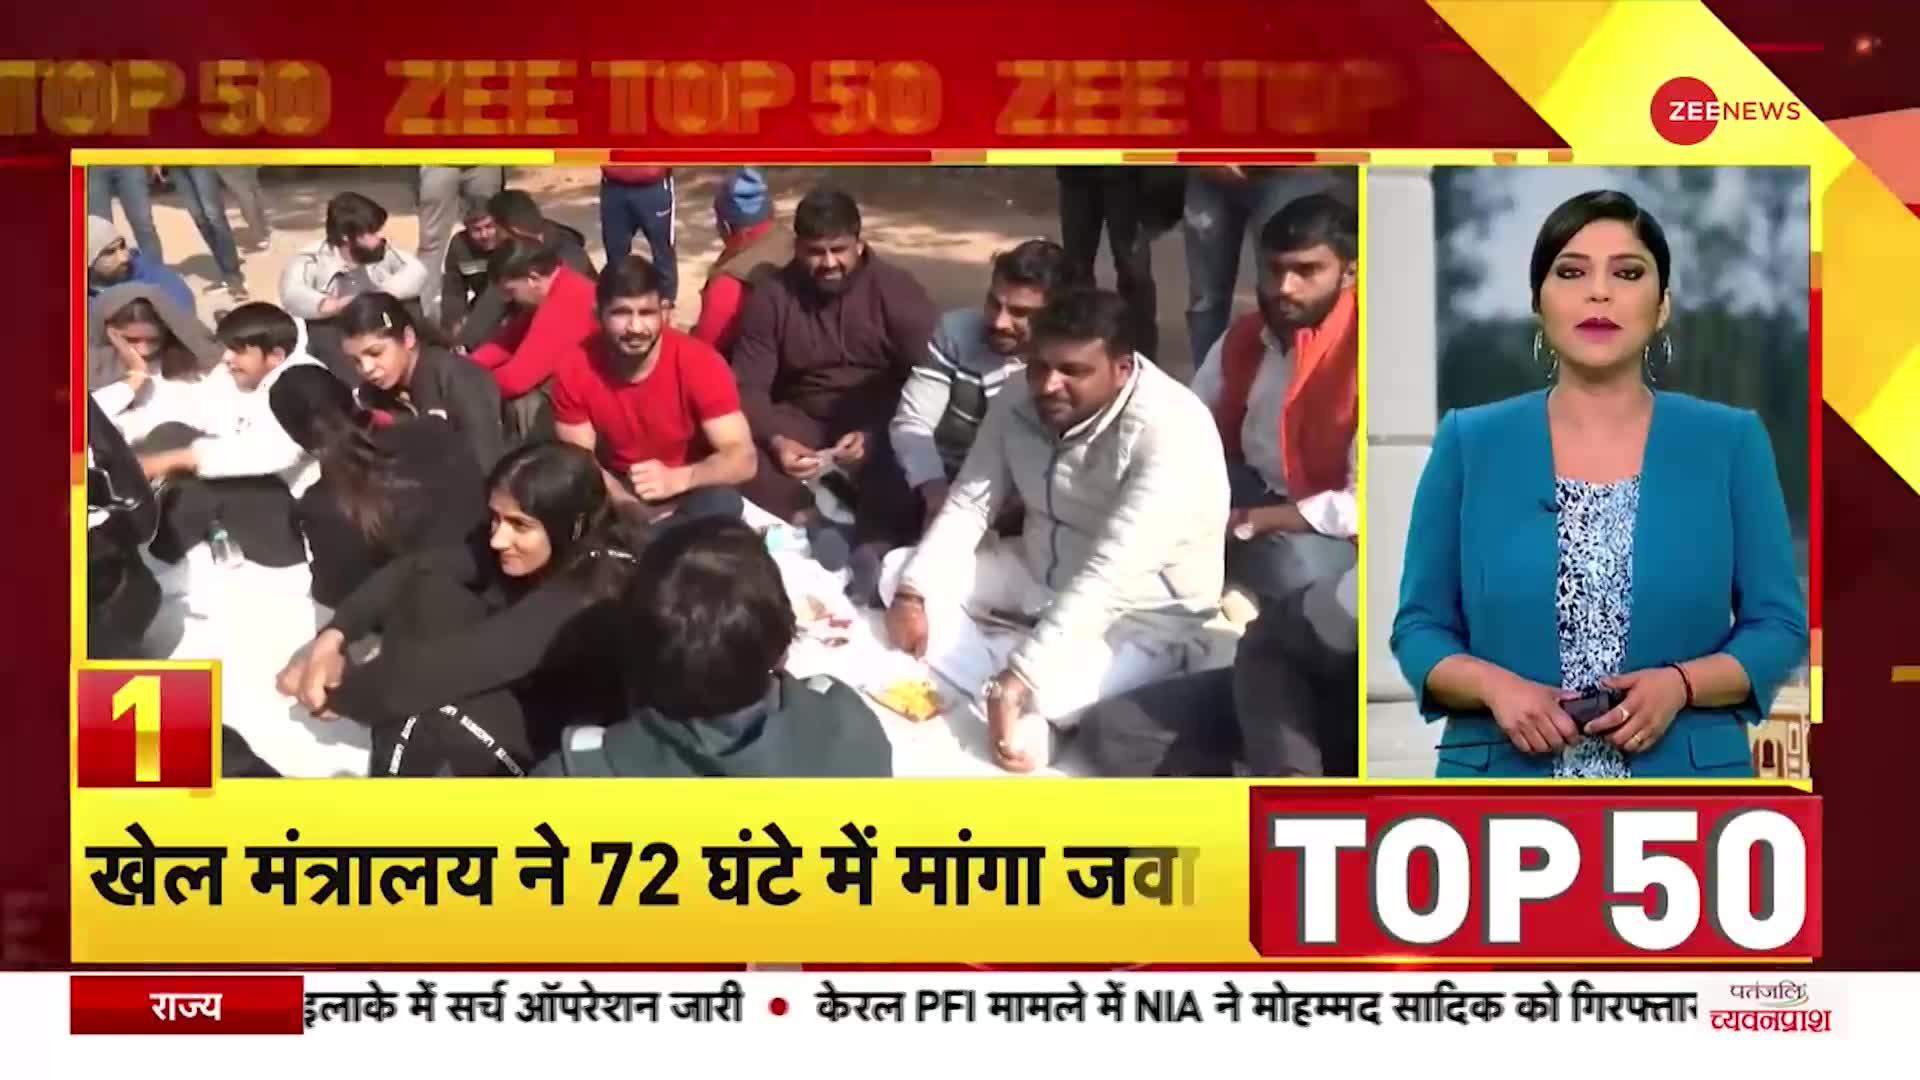 ZEE TOP 50: बिहार के CM Nitish Kumar का PM Modi पर निशाना, कहा, 'उन्हें क्या पता पिछड़ेपन का दर्द'